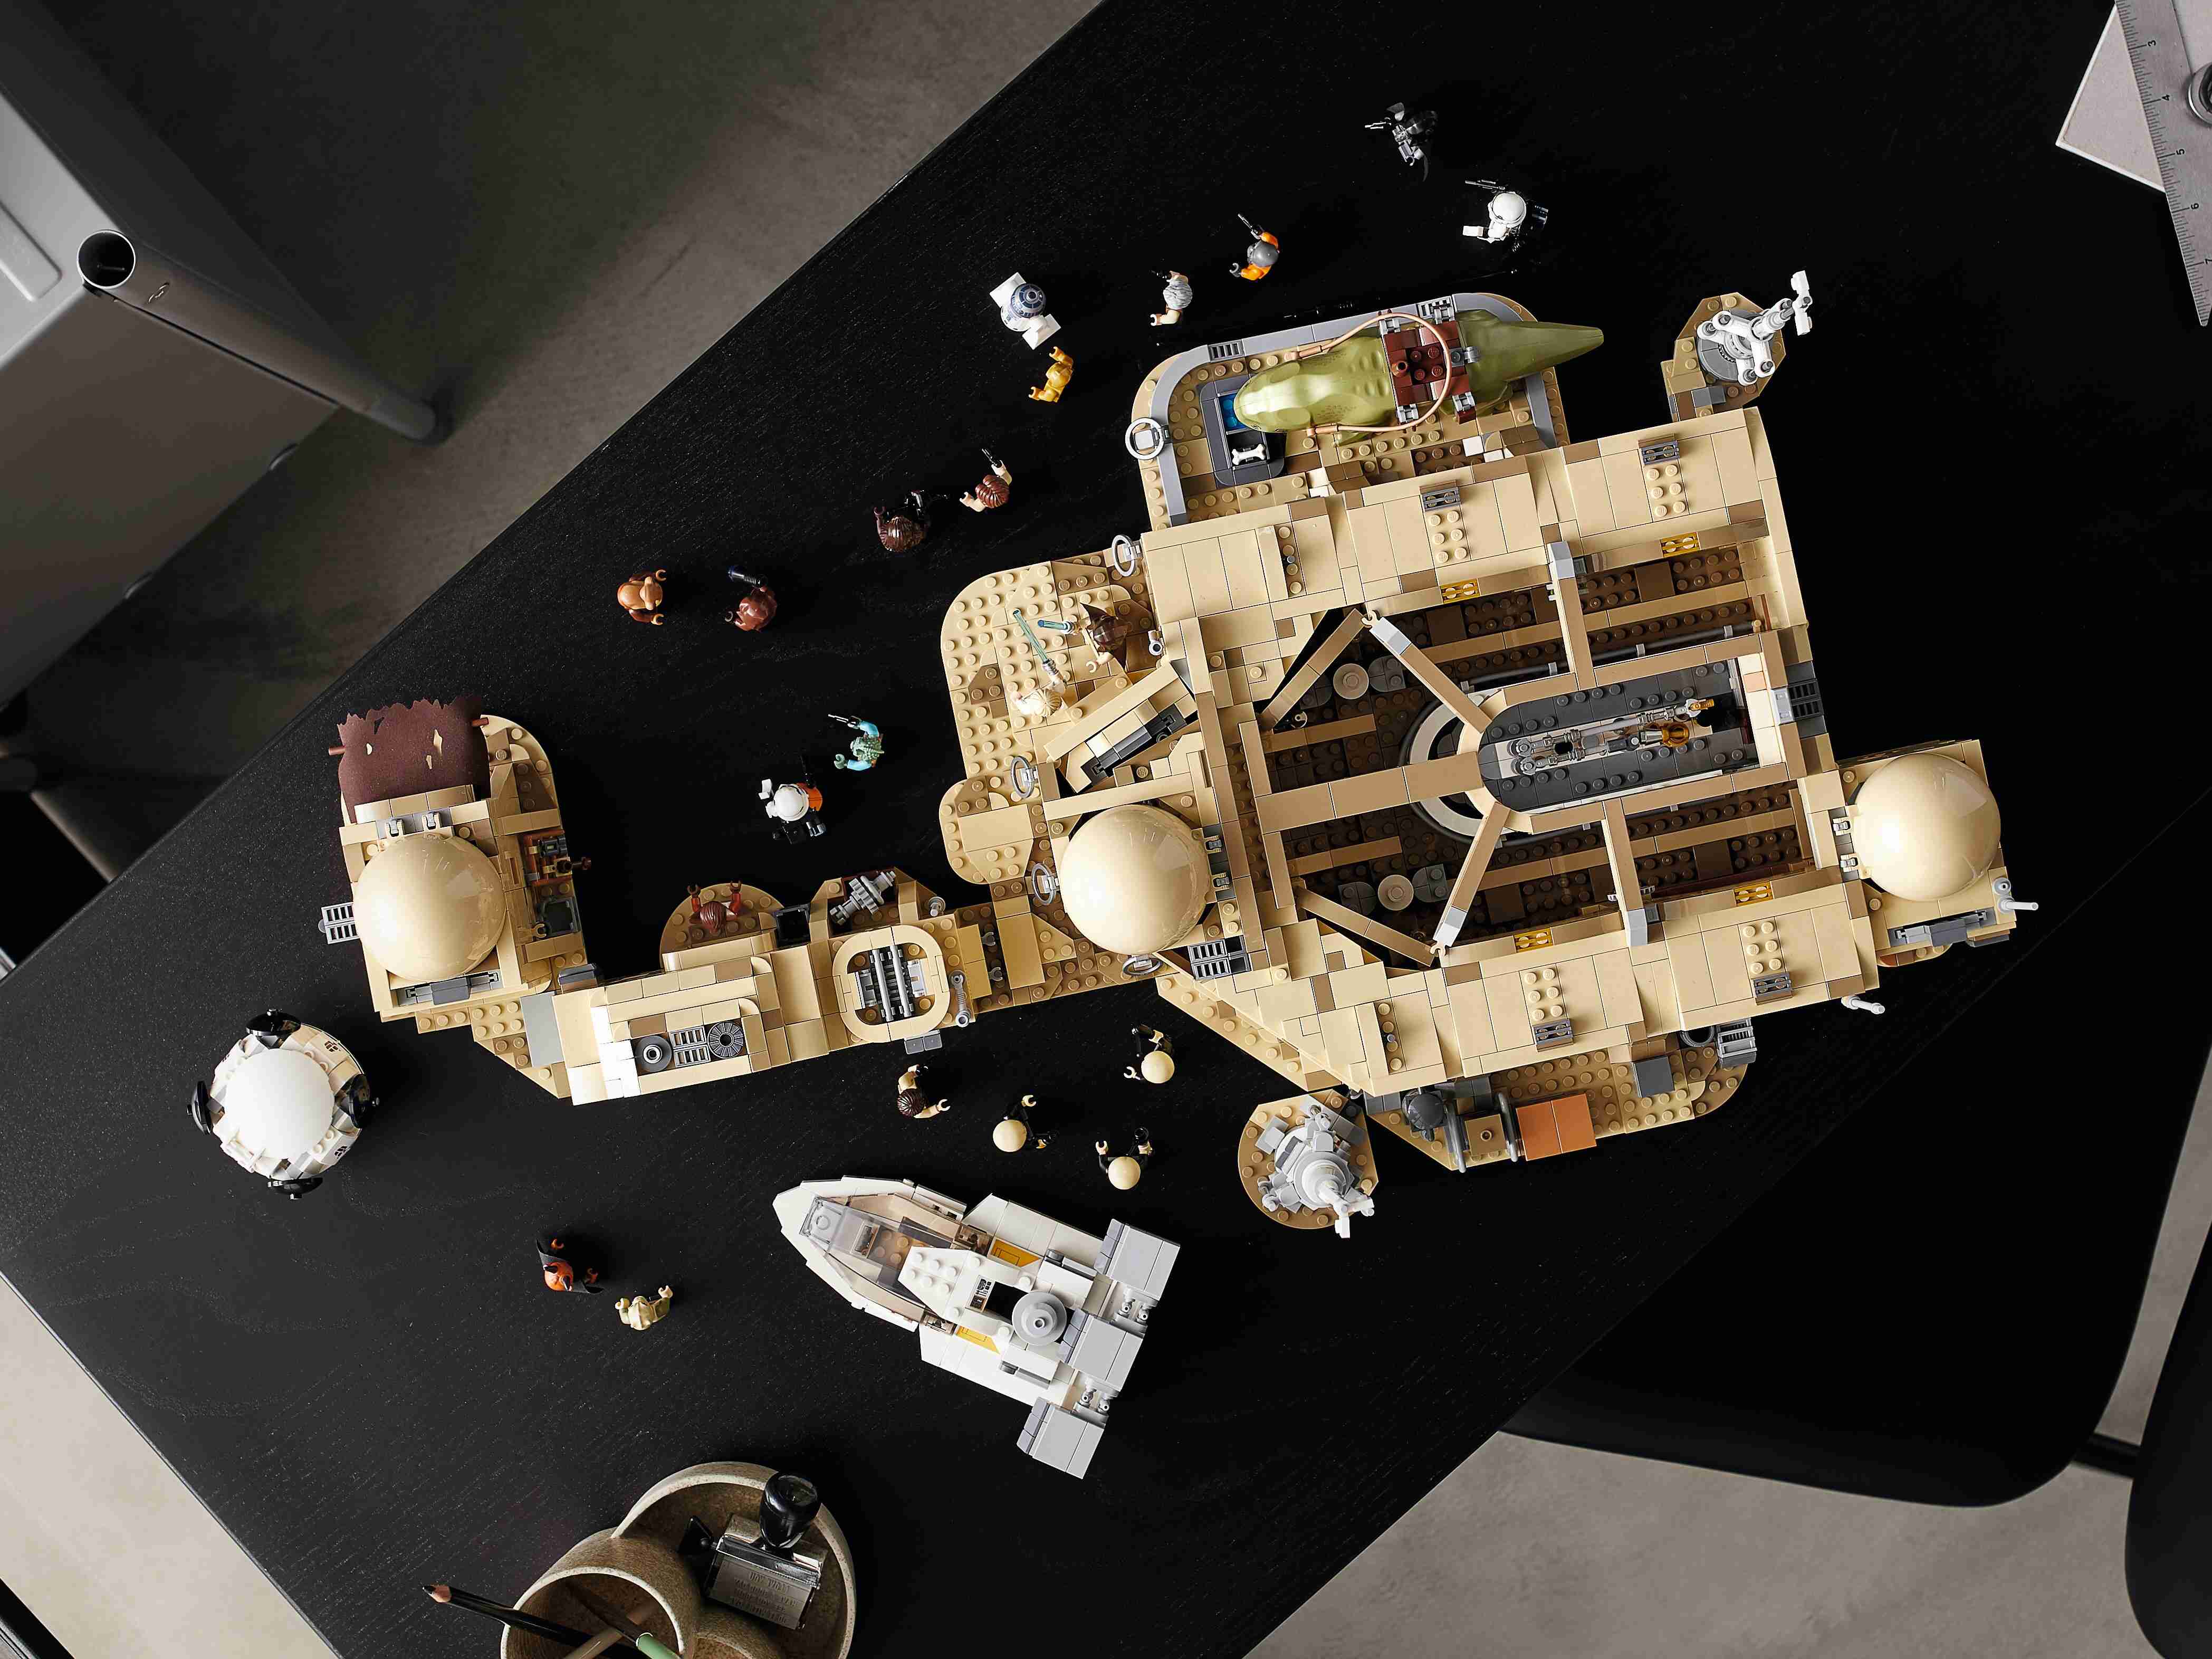 LEGO 75290 Star Wars Mos Eisley Cantina Konstruktionsspielzeug